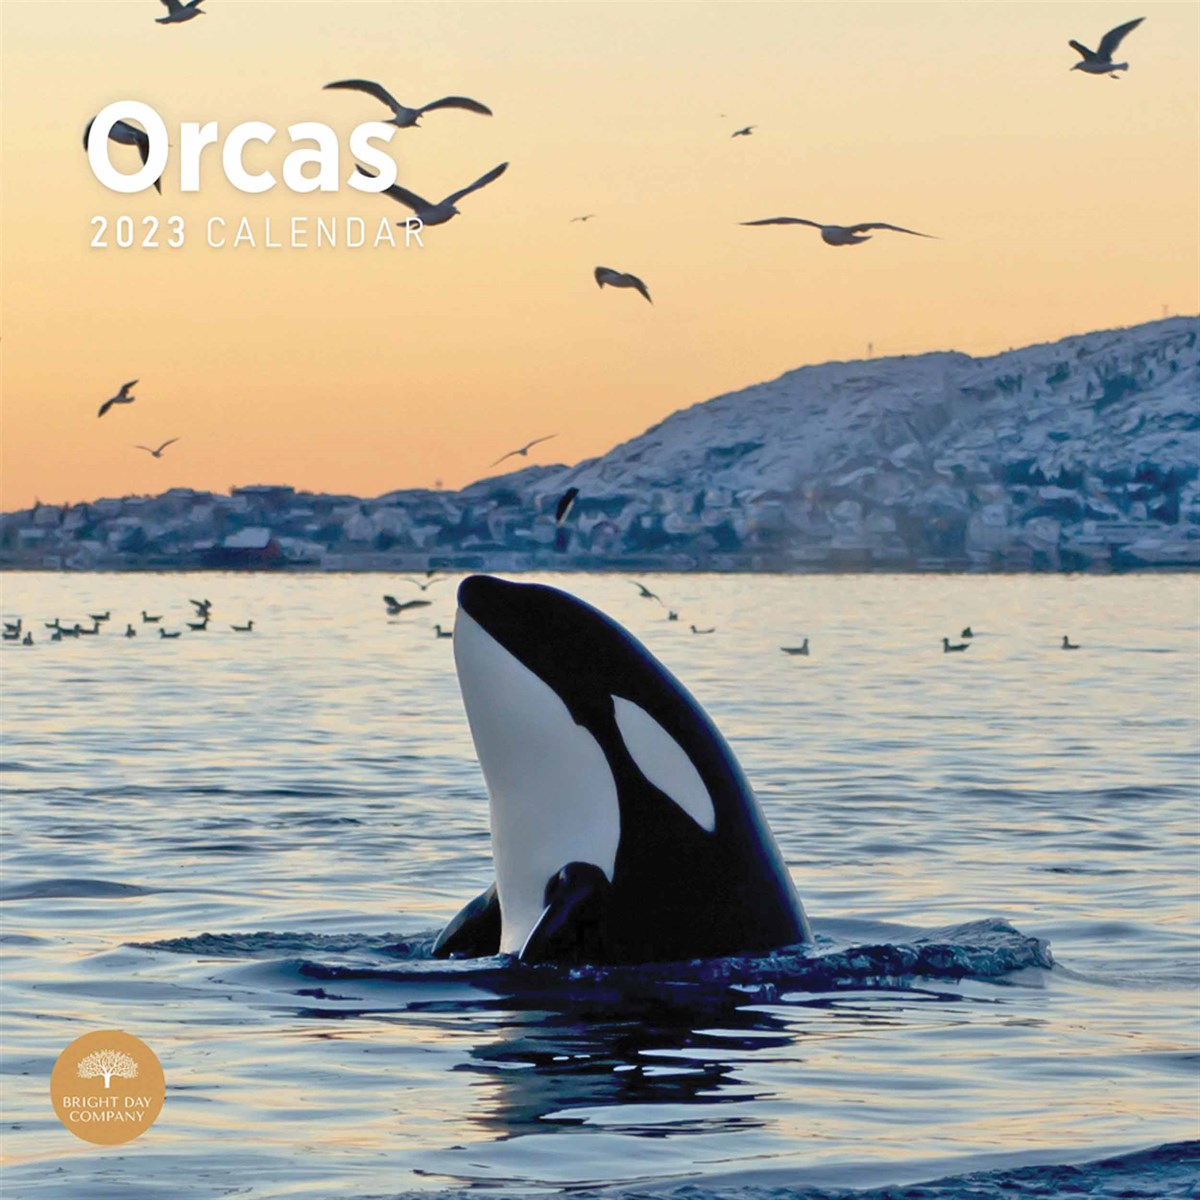 Orcas 2023 Calendars